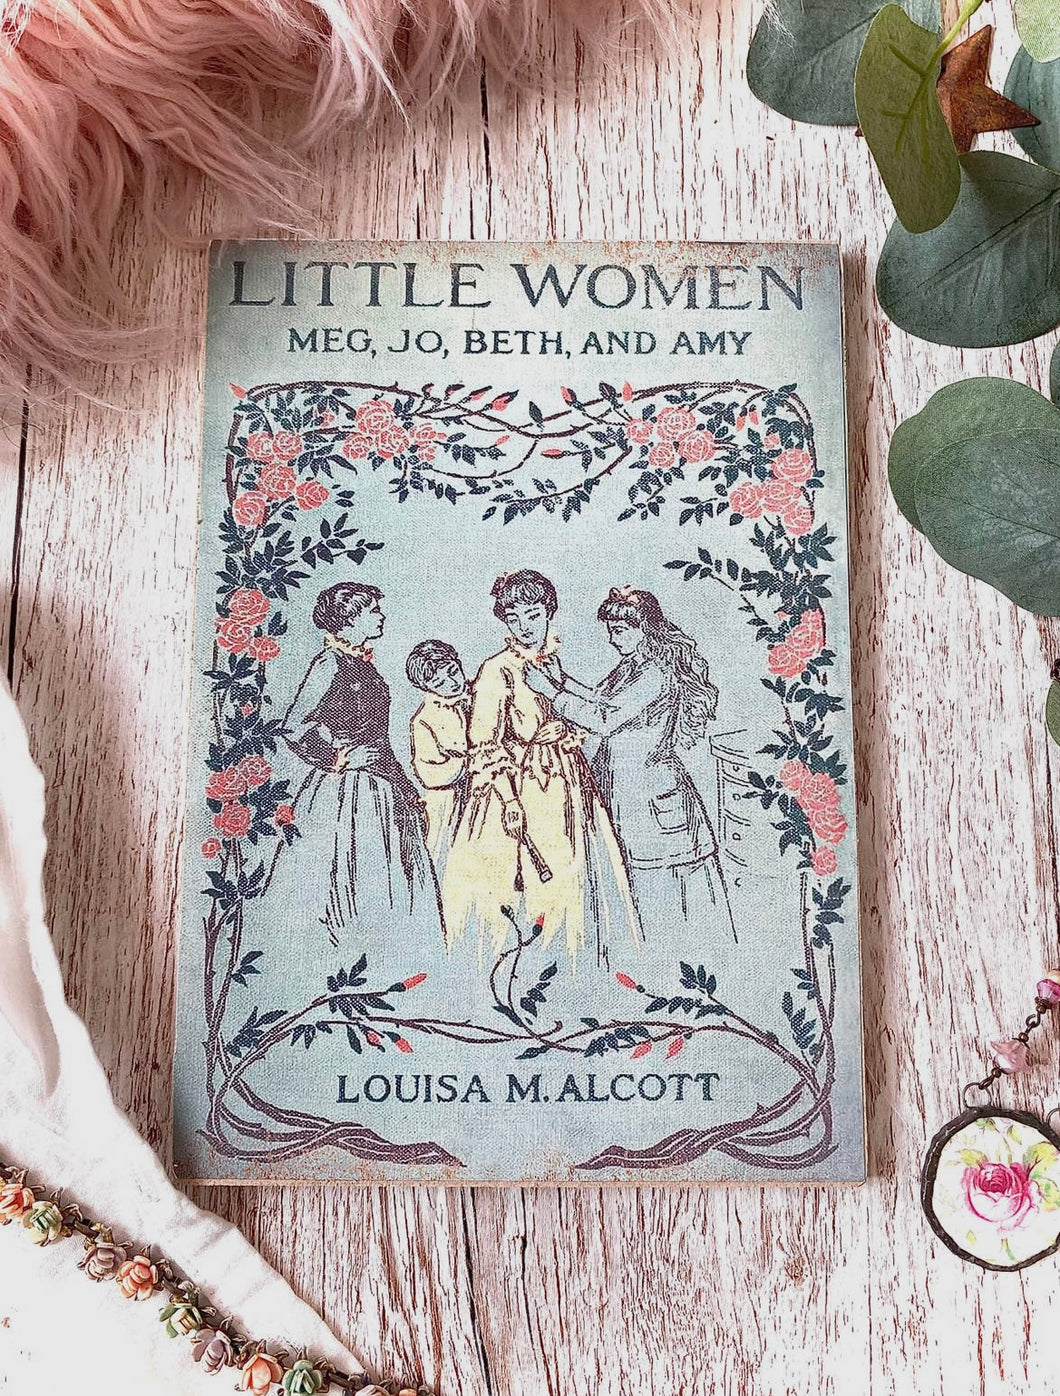 Plac pren maint A5 o glawr Vintage y llyfr ‘Little Women’ / ‘Little Women’ Vintage book cover A5 wooden plack